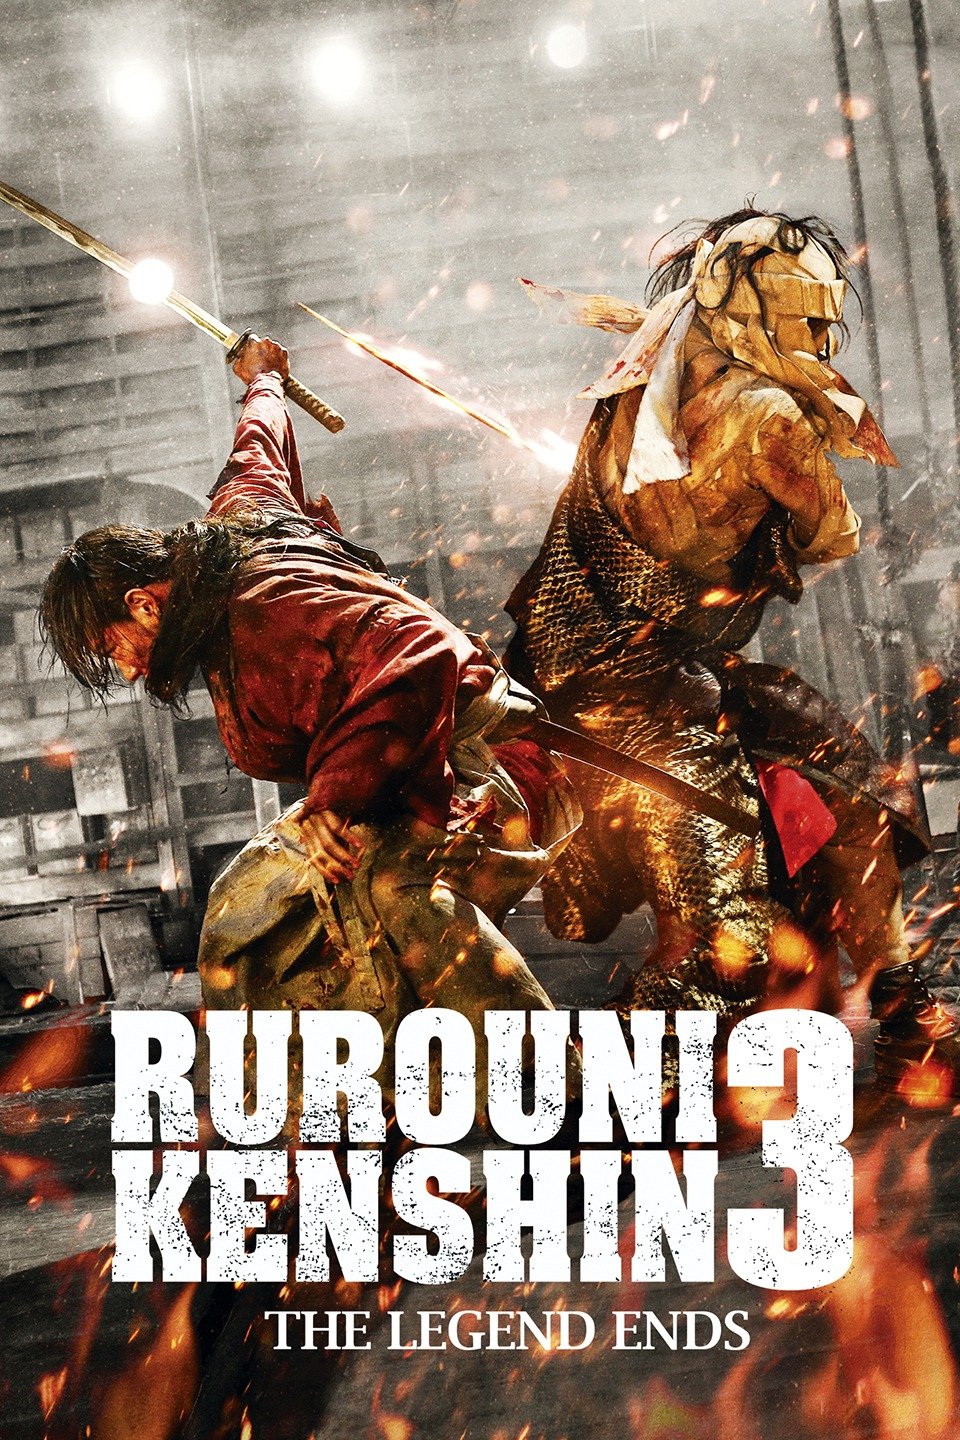 [MINI Super-HQ] Rurouni Kenshin 3: The Legend Ends (2014) รูโรนิ เคนชิน คนจริง โคตรซามูไร ภาค 3 [1080p] [พากย์ไทย 5.1 + ญี่ปุ่น DTS] [บรรยายไทย + อังกฤษ] [เสียงไทย + ซับไทย] [ONE2UP]